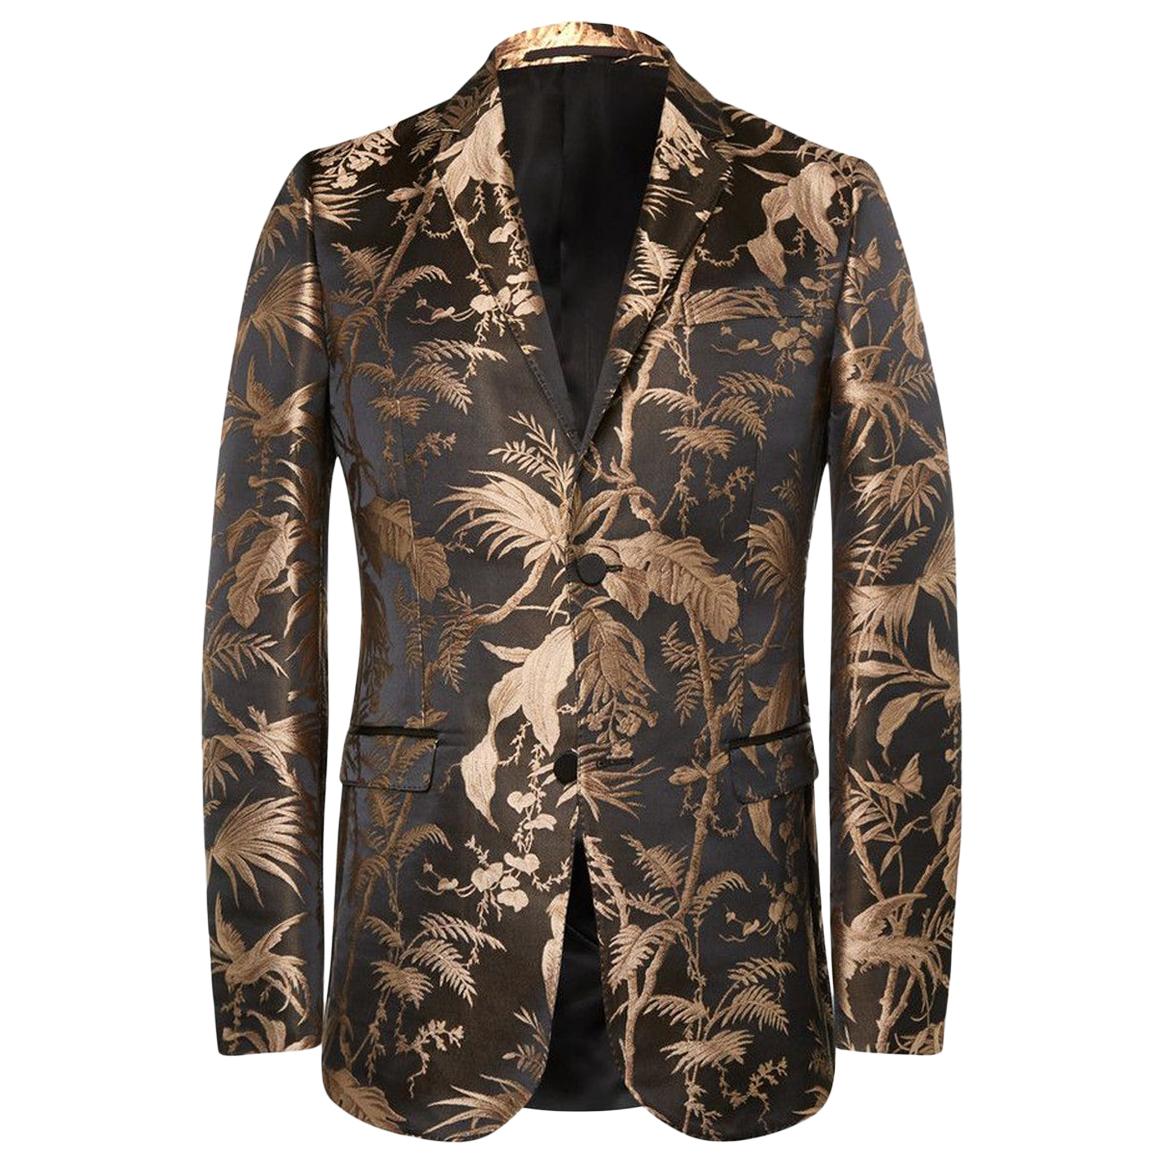 New Gucci Monaco Tropical Jacquard Tuxedo Jacket Italian 48 R 